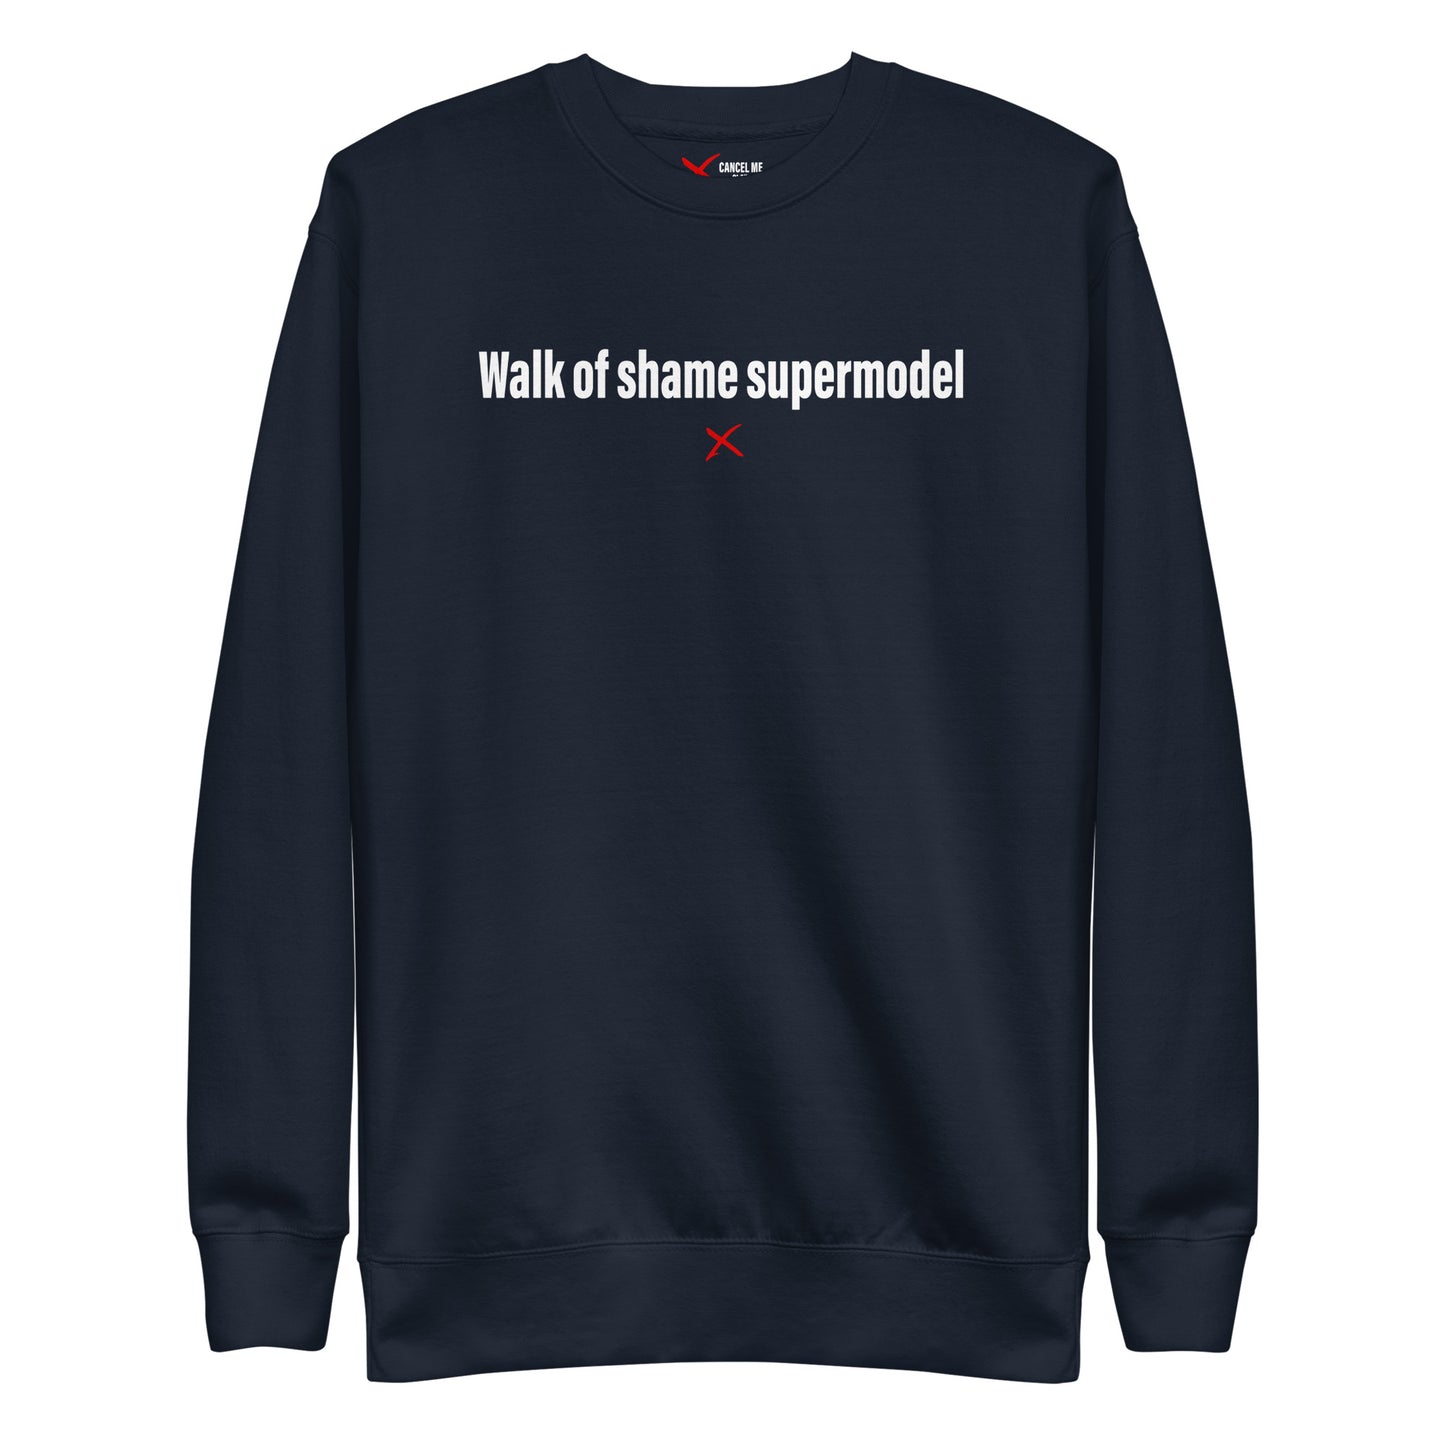 Walk of shame supermodel - Sweatshirt